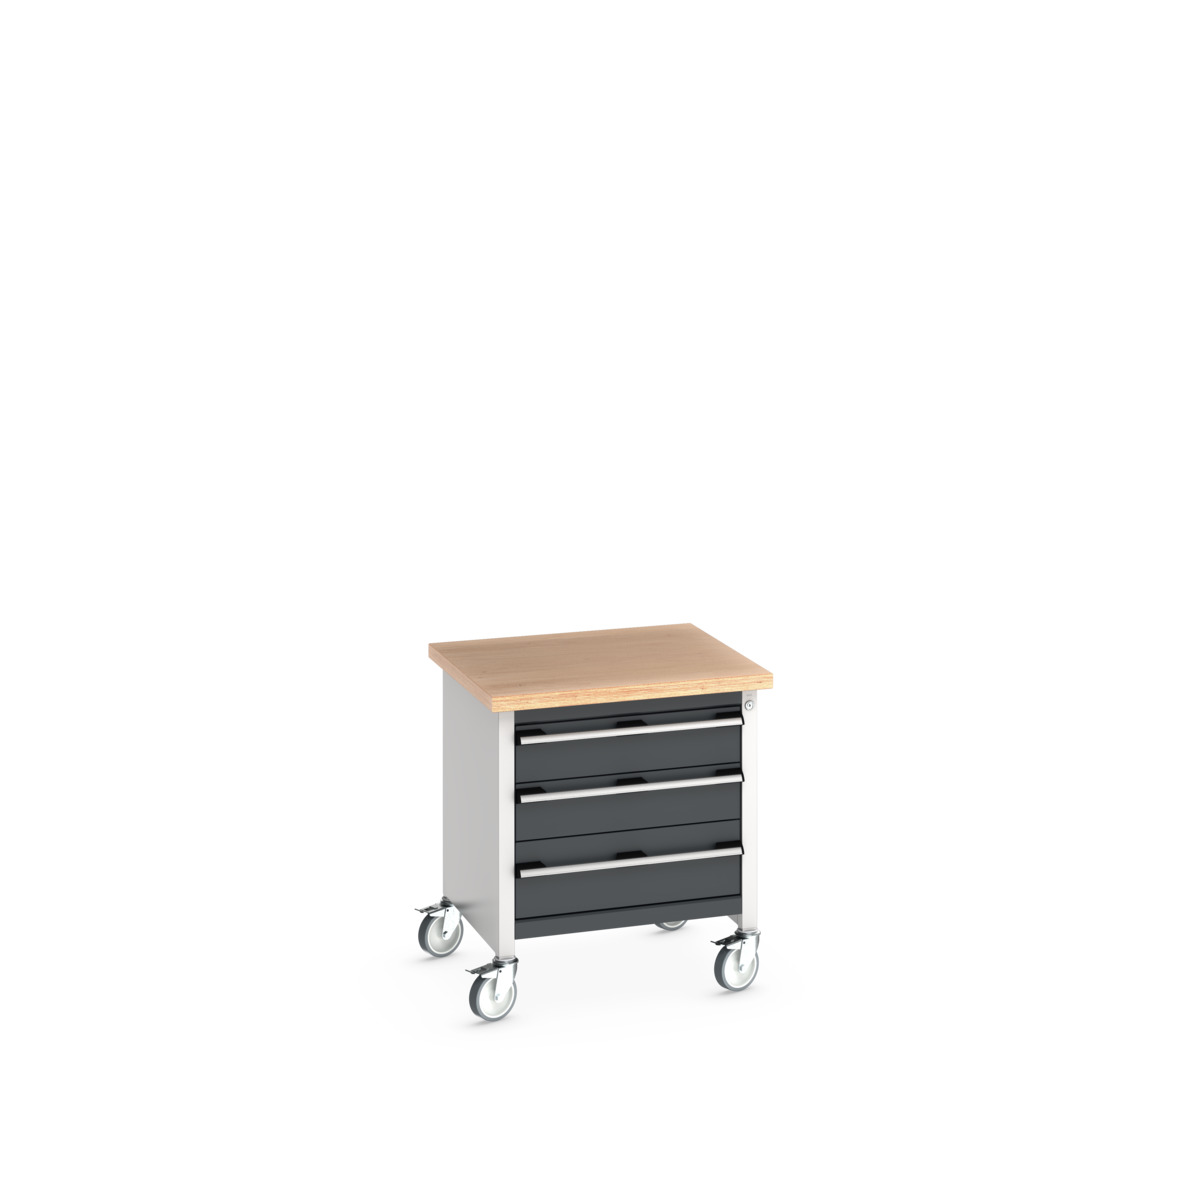 41002091. - cubio mobile storage bench (mpx)